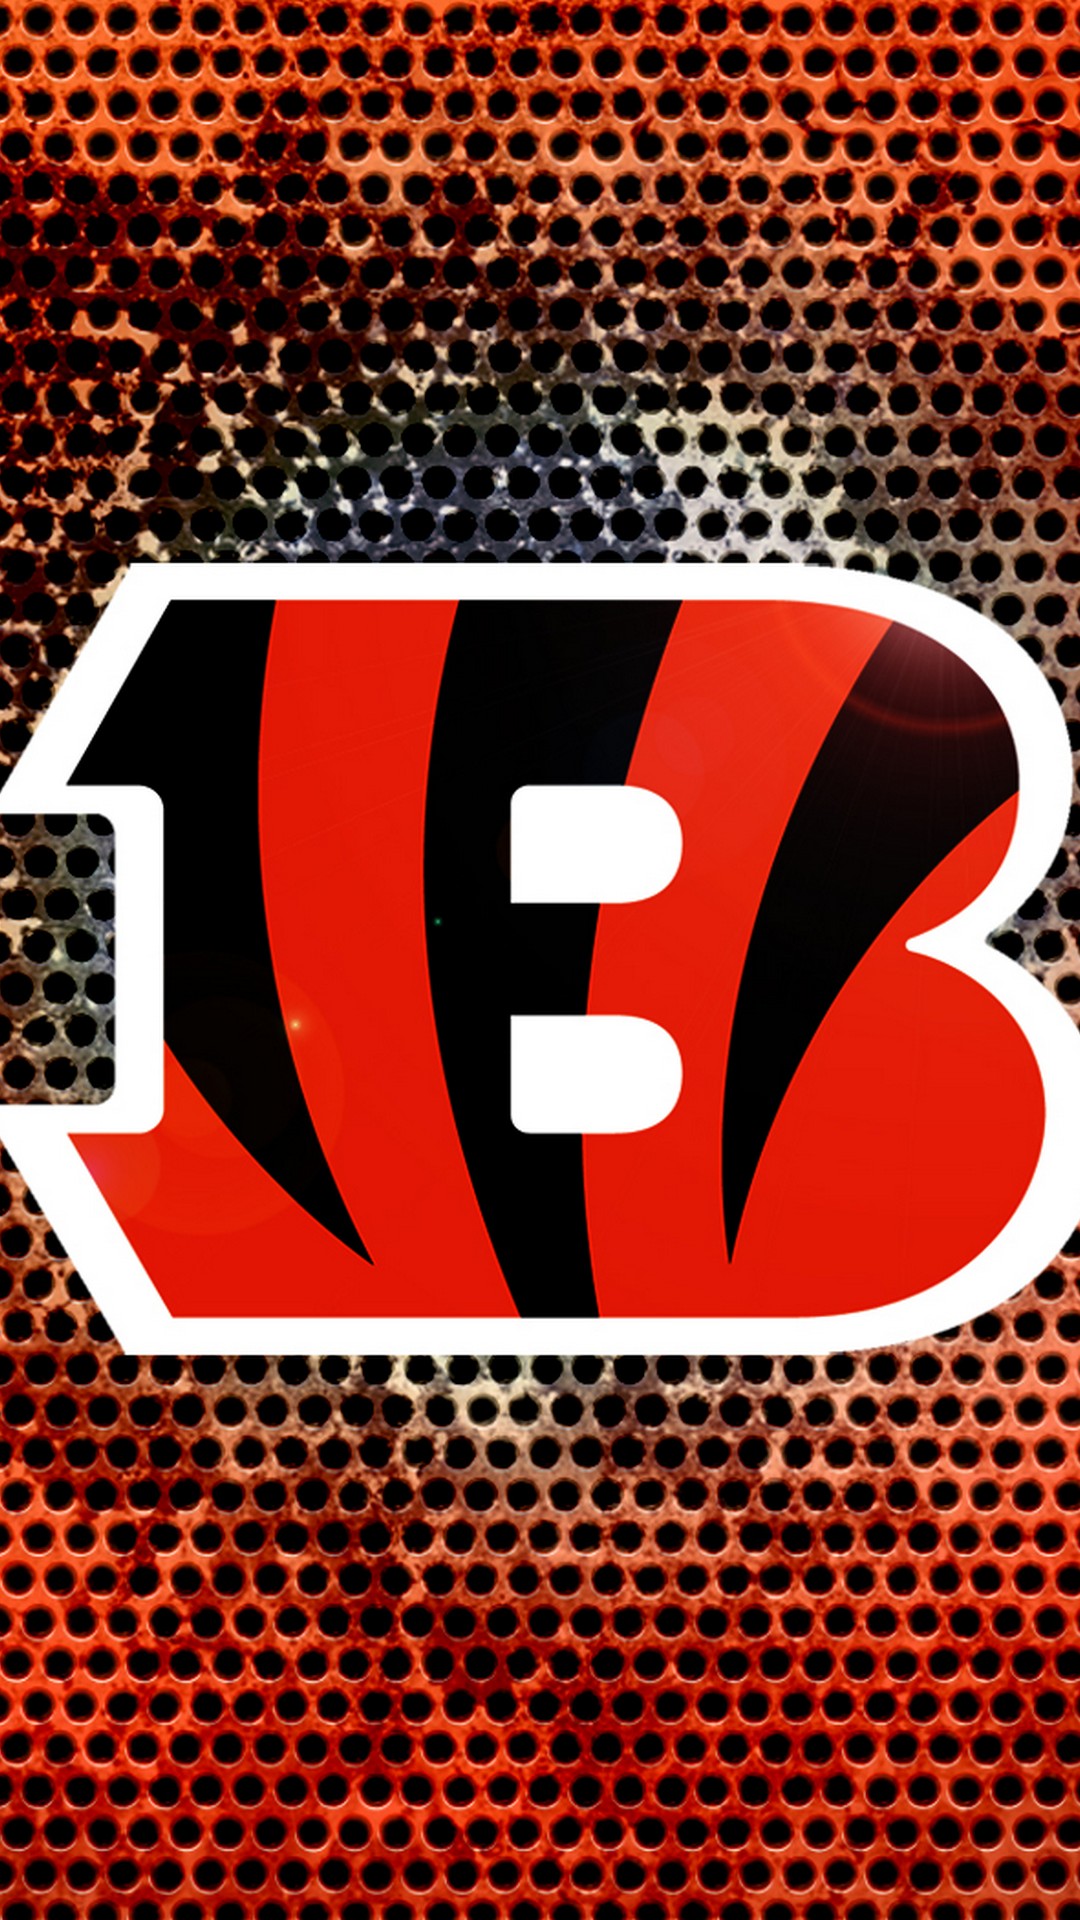 Cincinnati Bengals iPhone Lock Screen Wallpaper - 2021 NFL iPhone Wallpaper